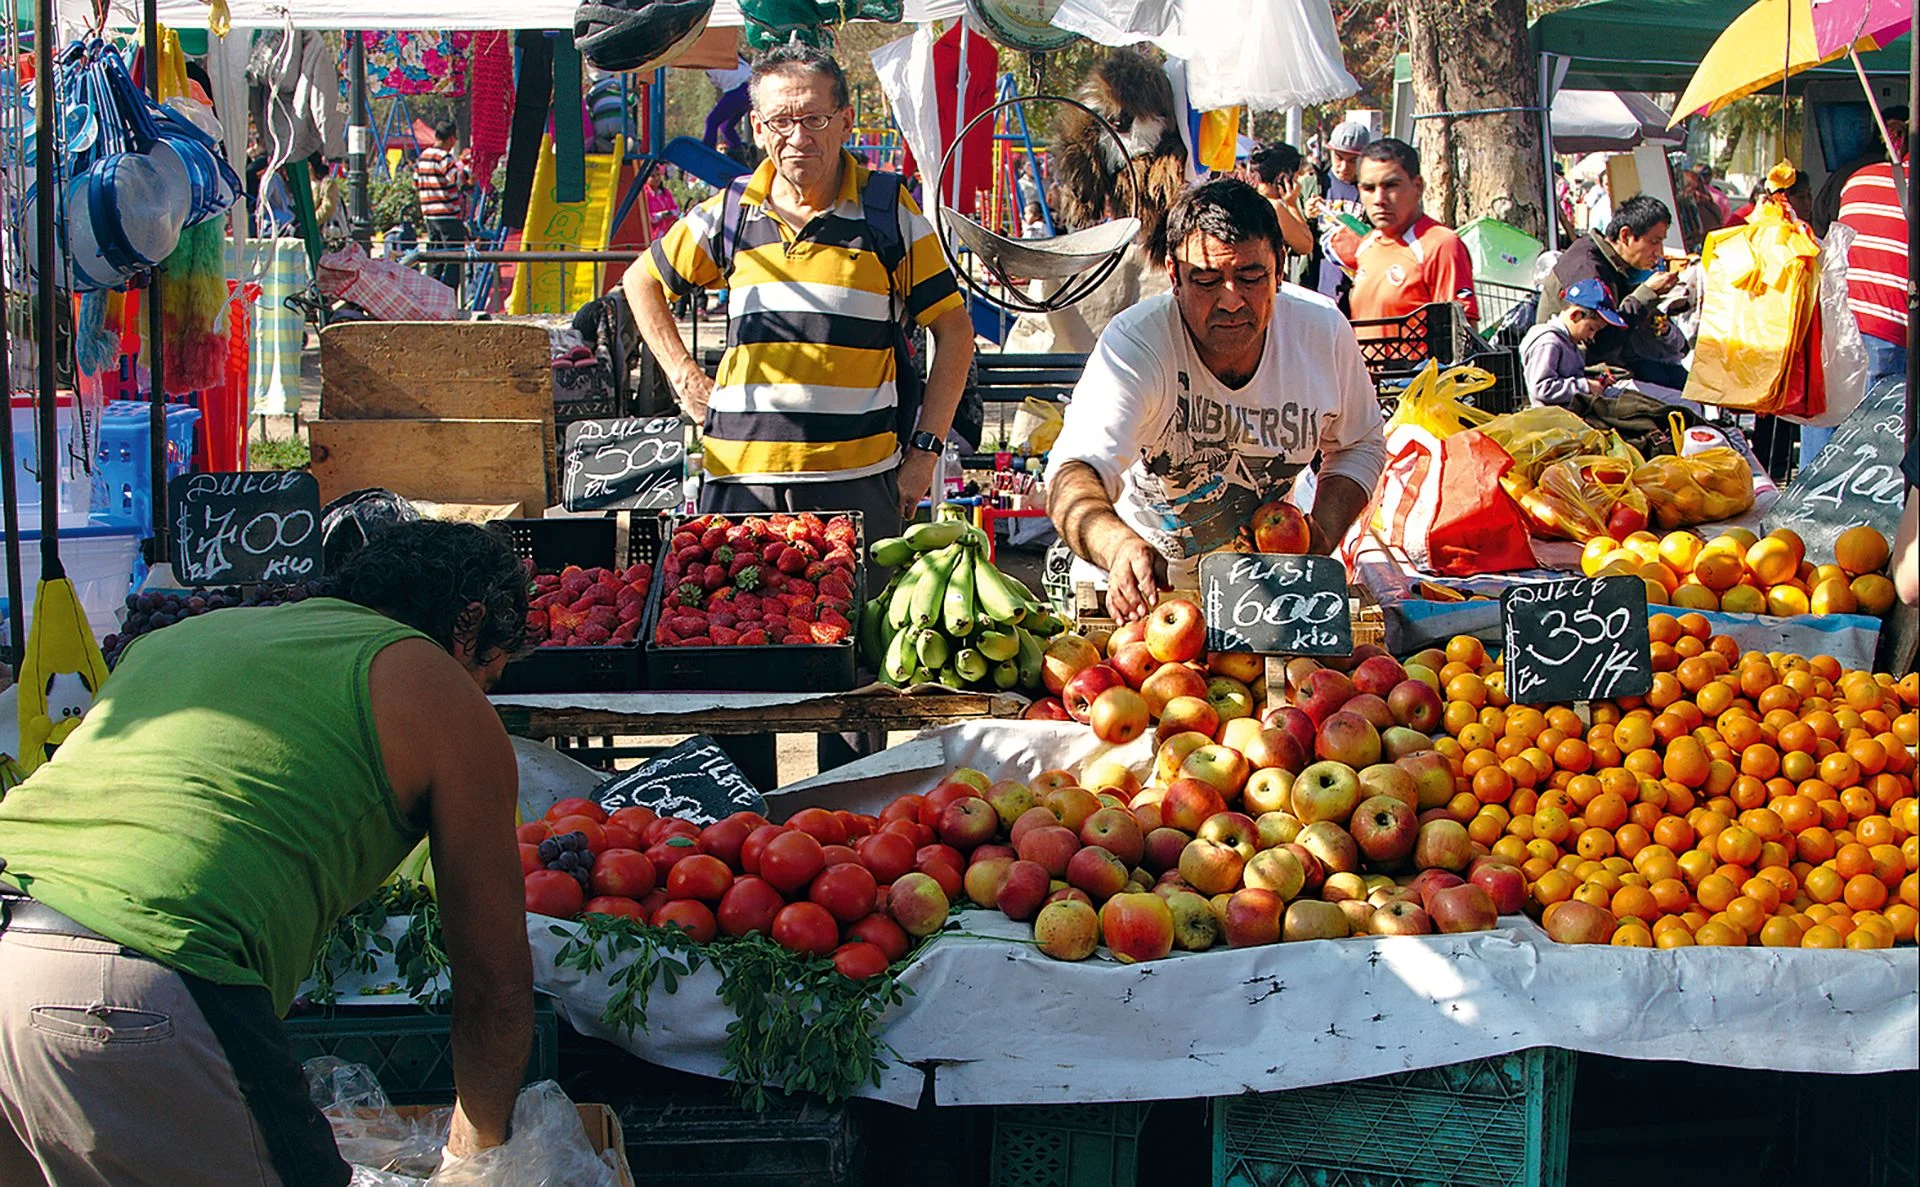 Fruit seller at the market.